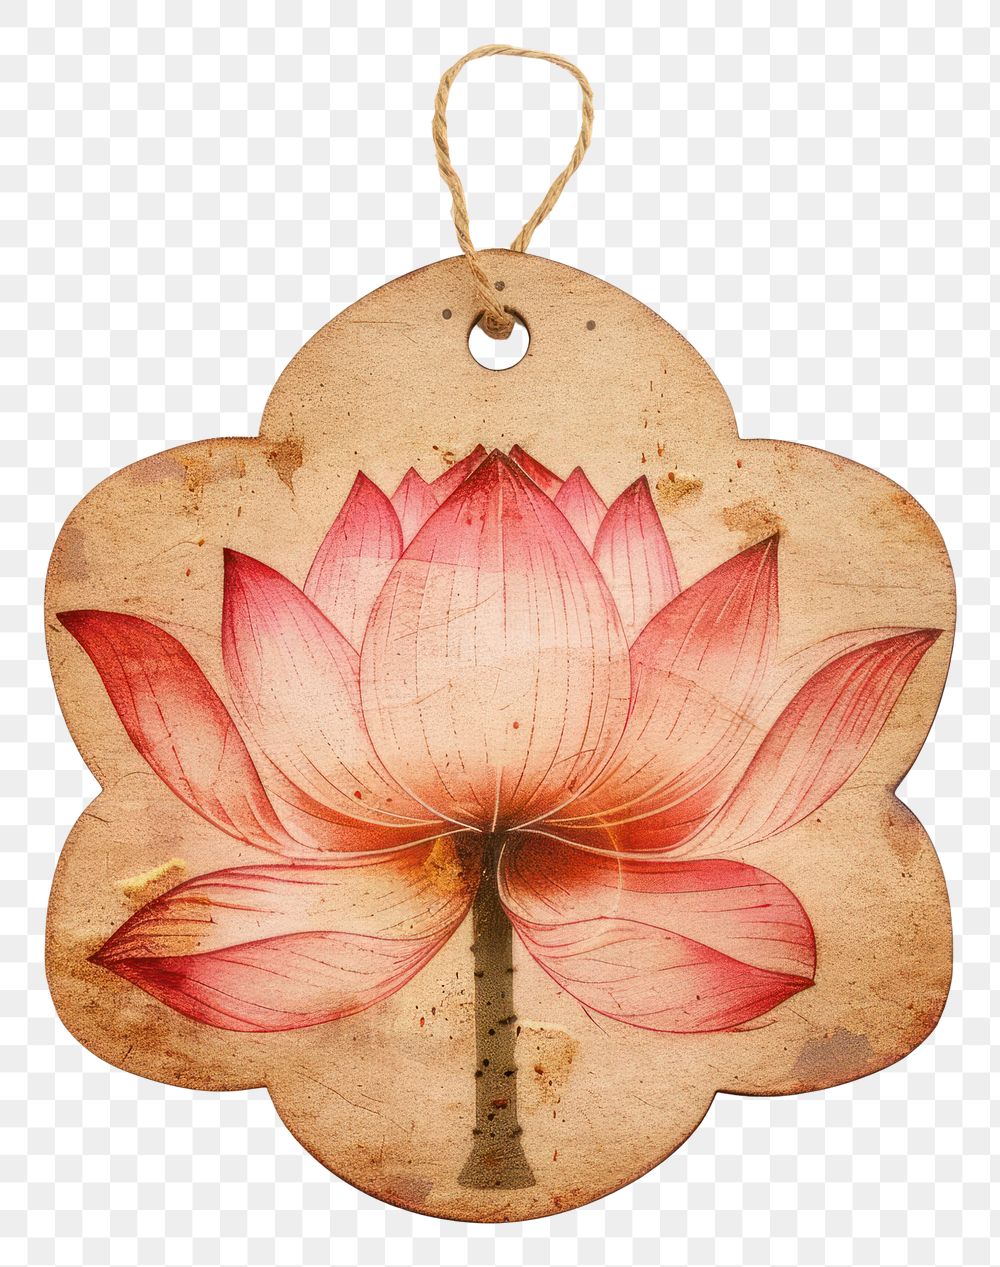 Lotus shape accessories chandelier accessory.